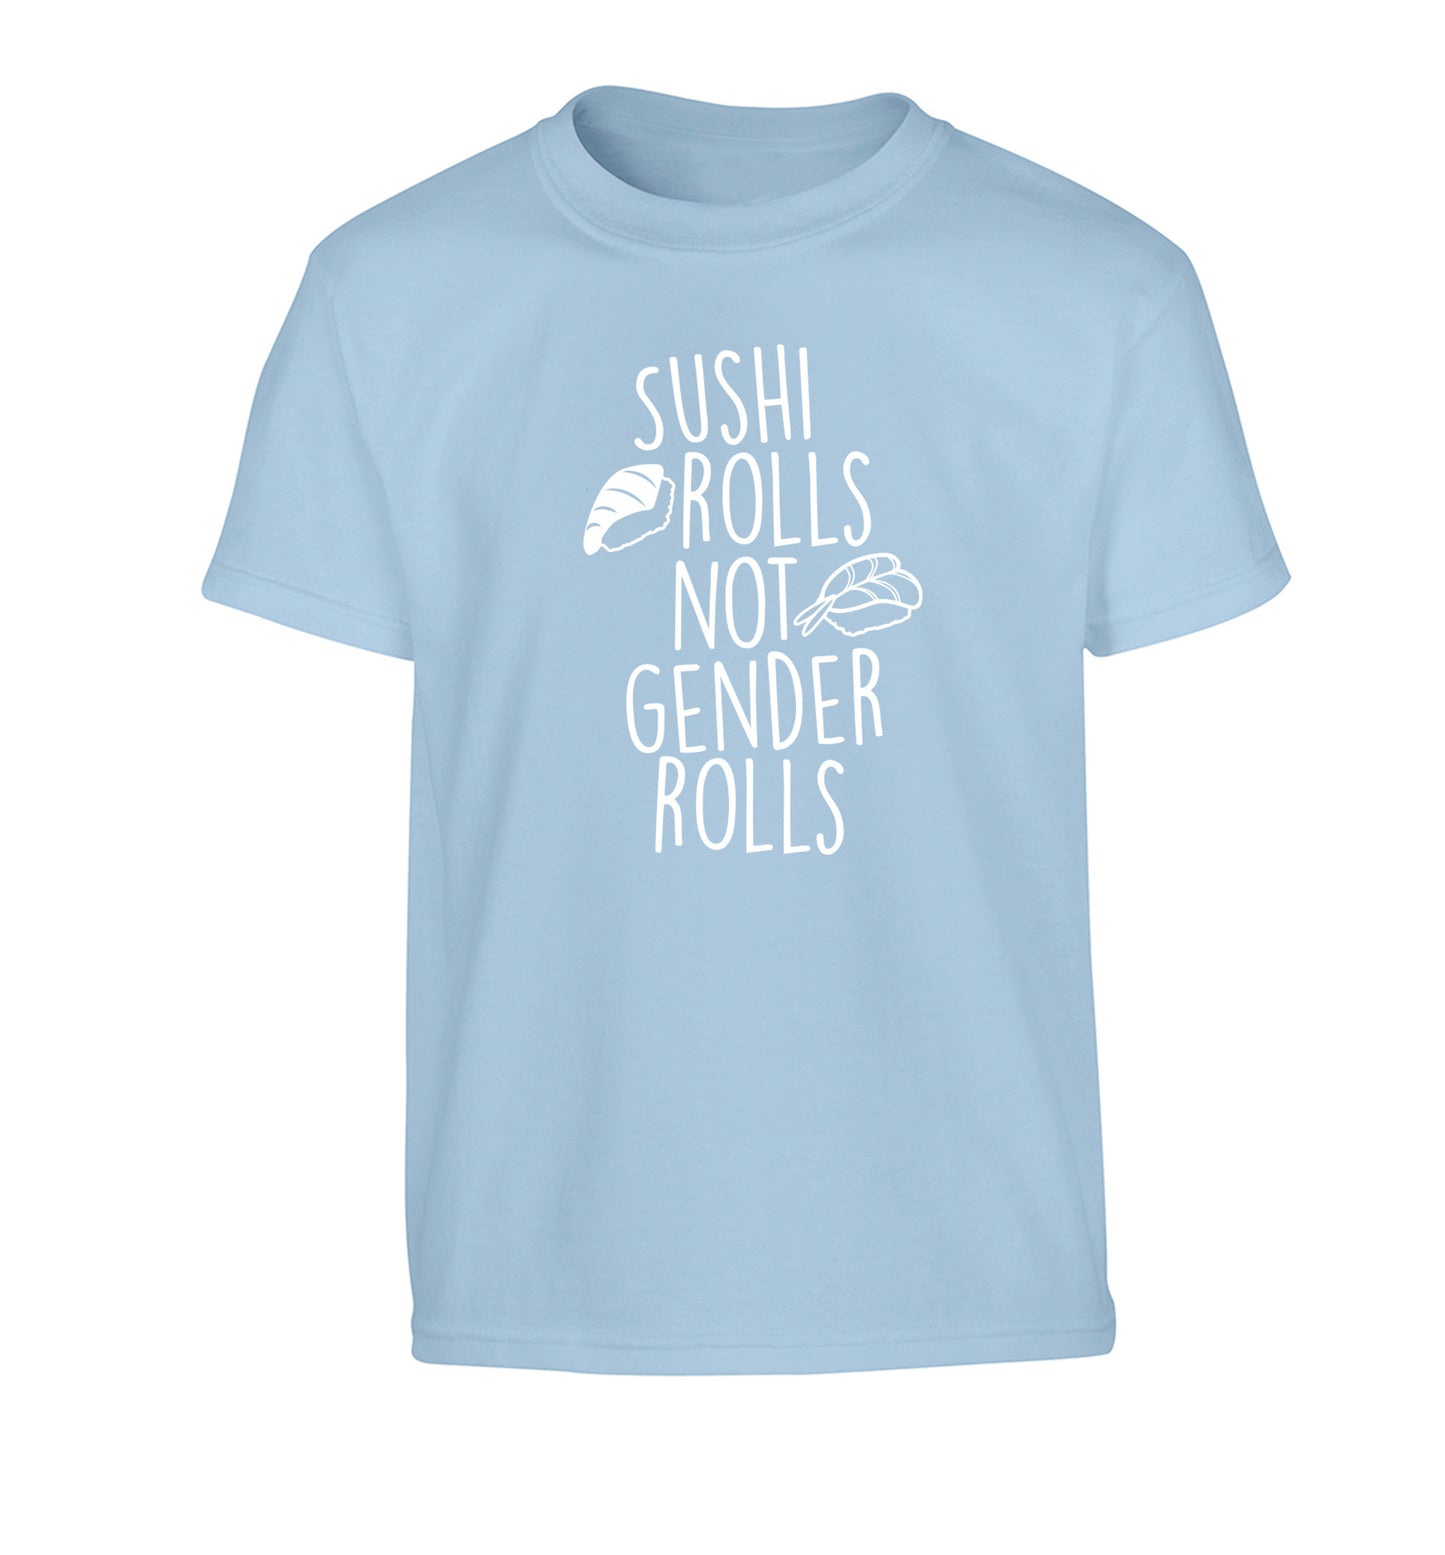 Sushi rolls not gender rolls Children's light blue Tshirt 12-14 Years